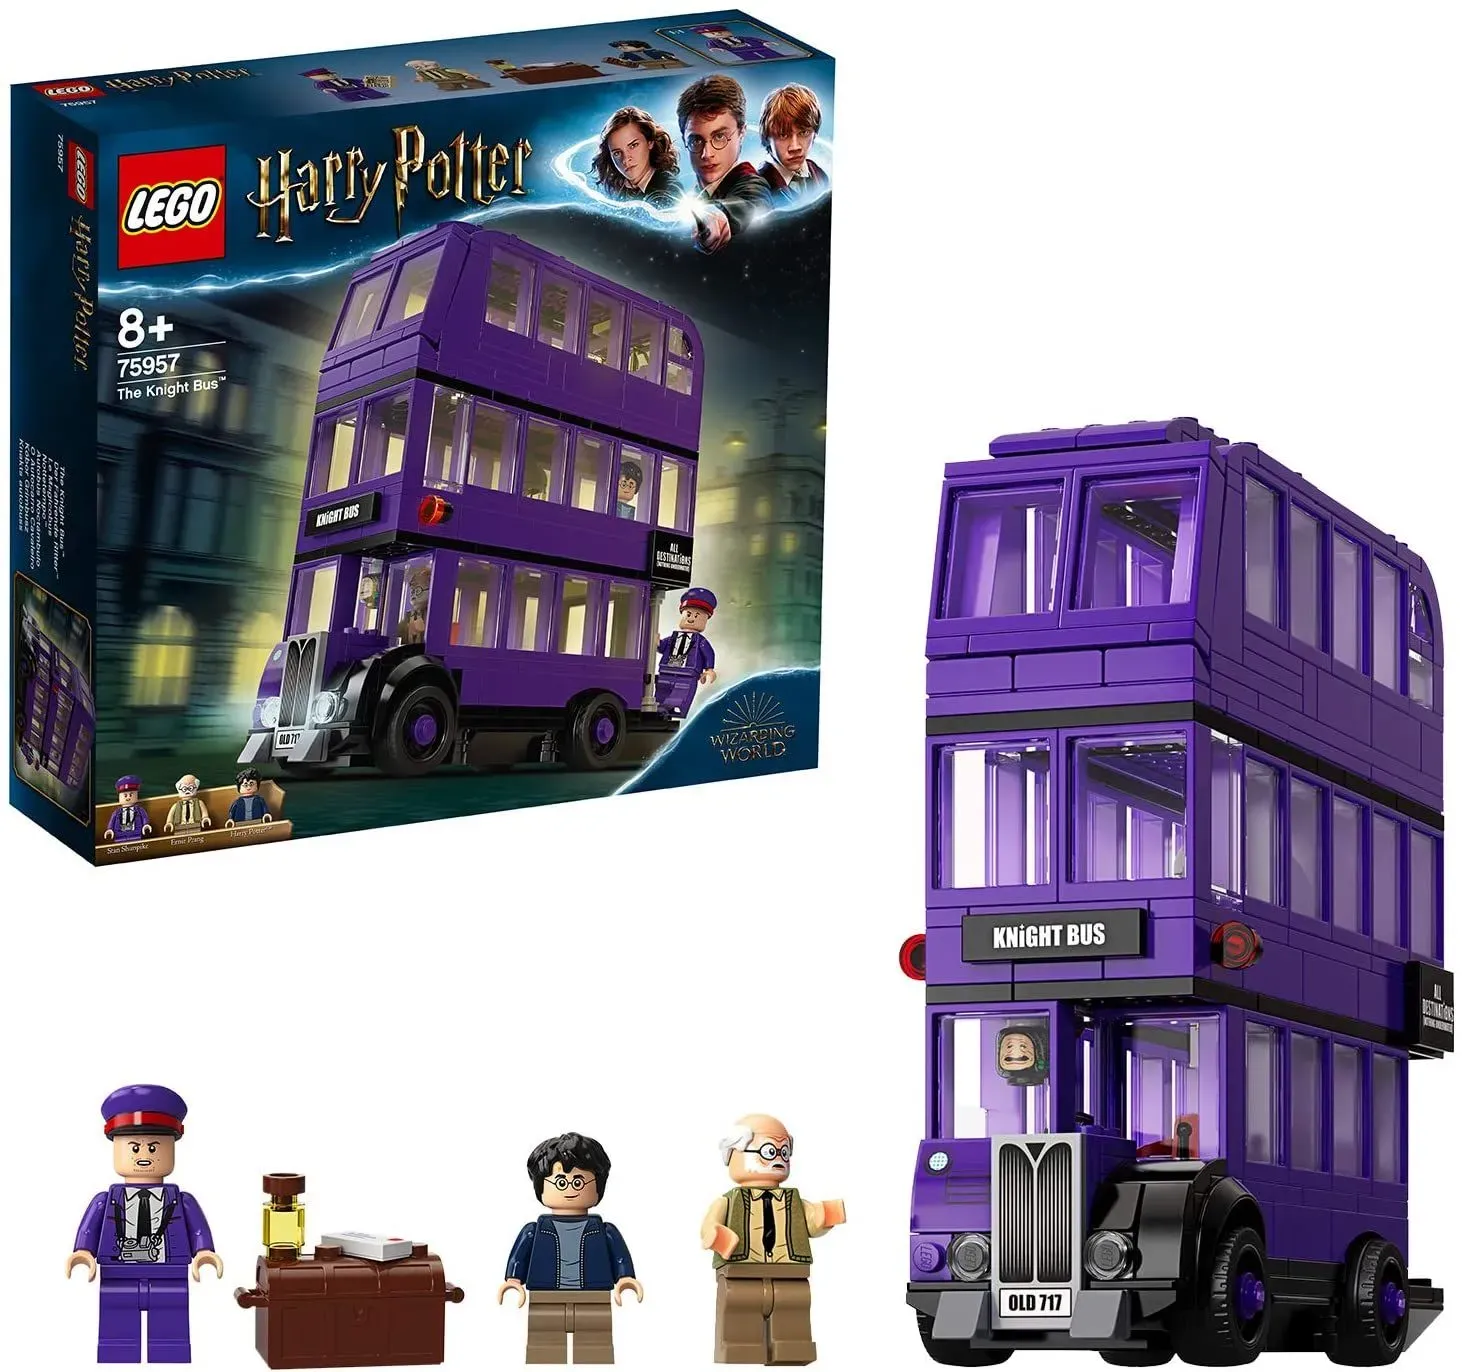 Lego Harry Potter Knight Bus